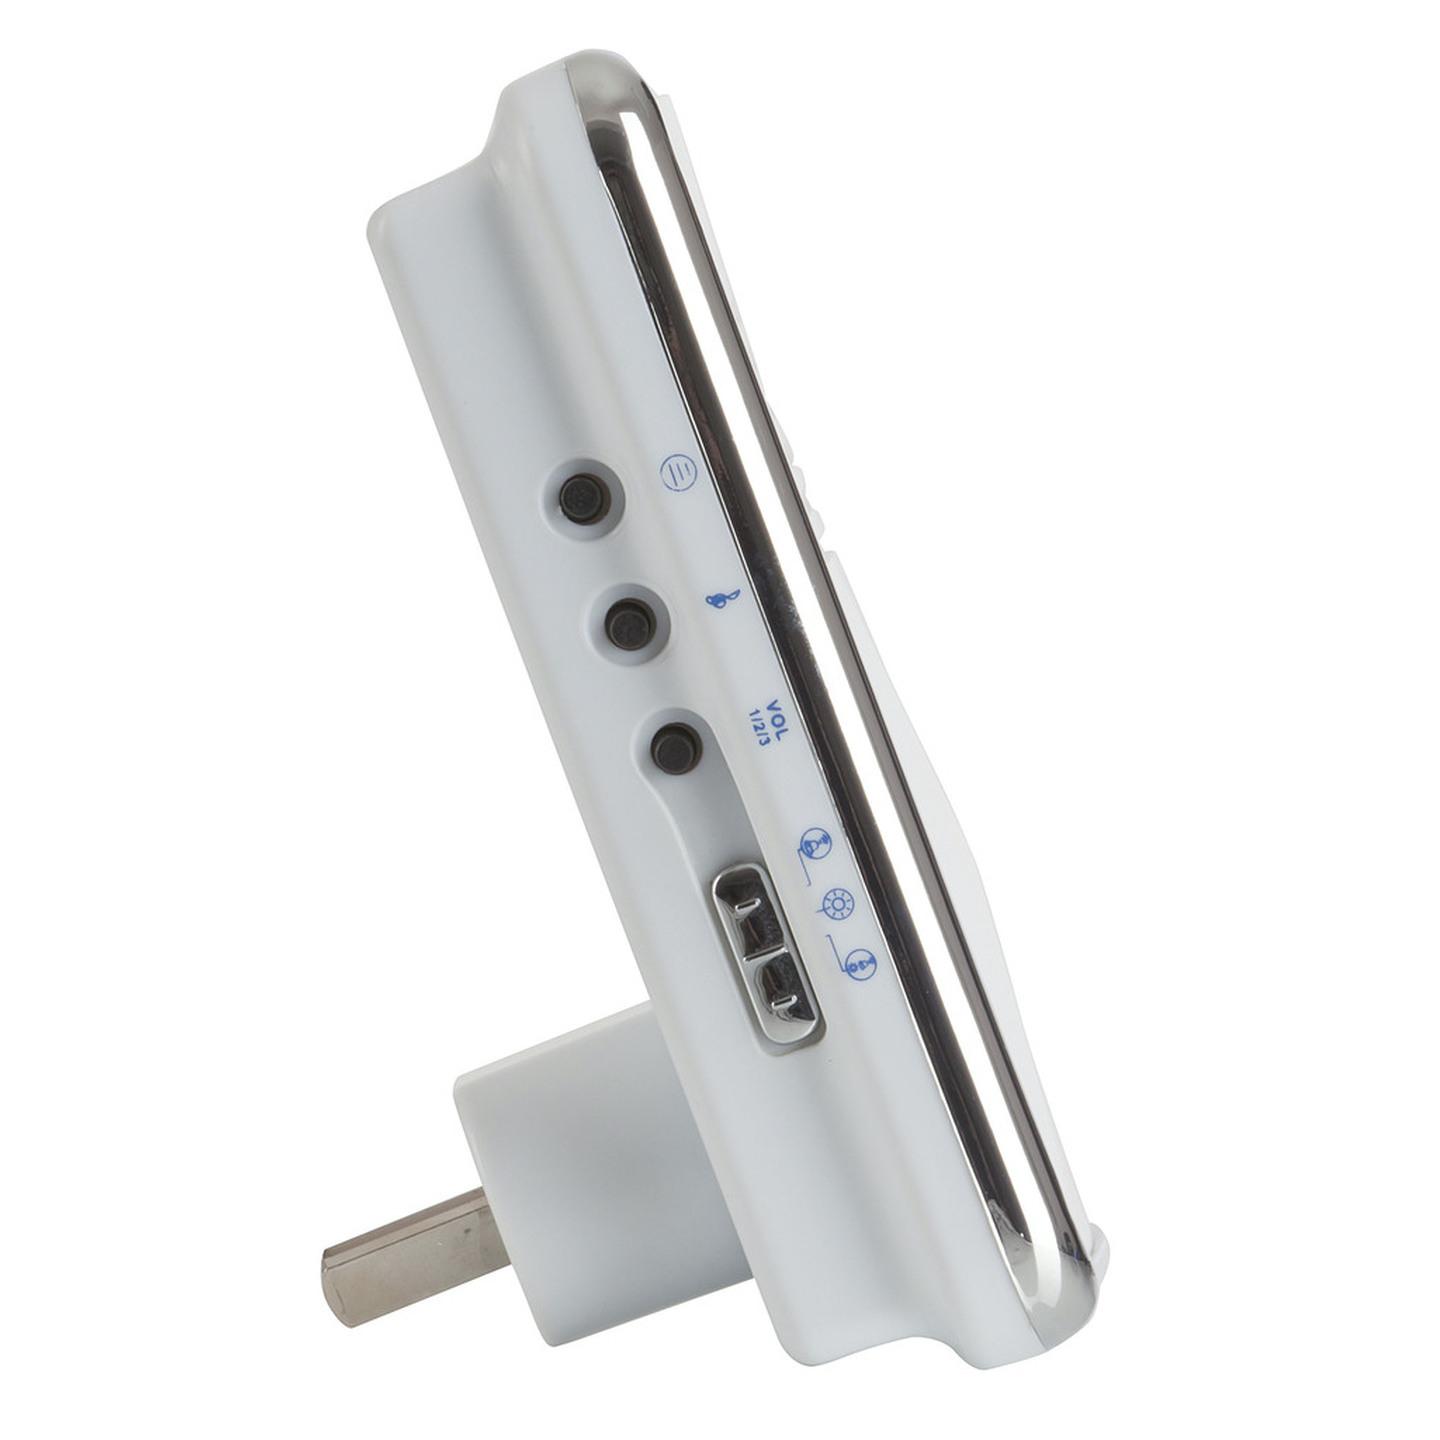 240VAC Plug-in Wireless Doorbell